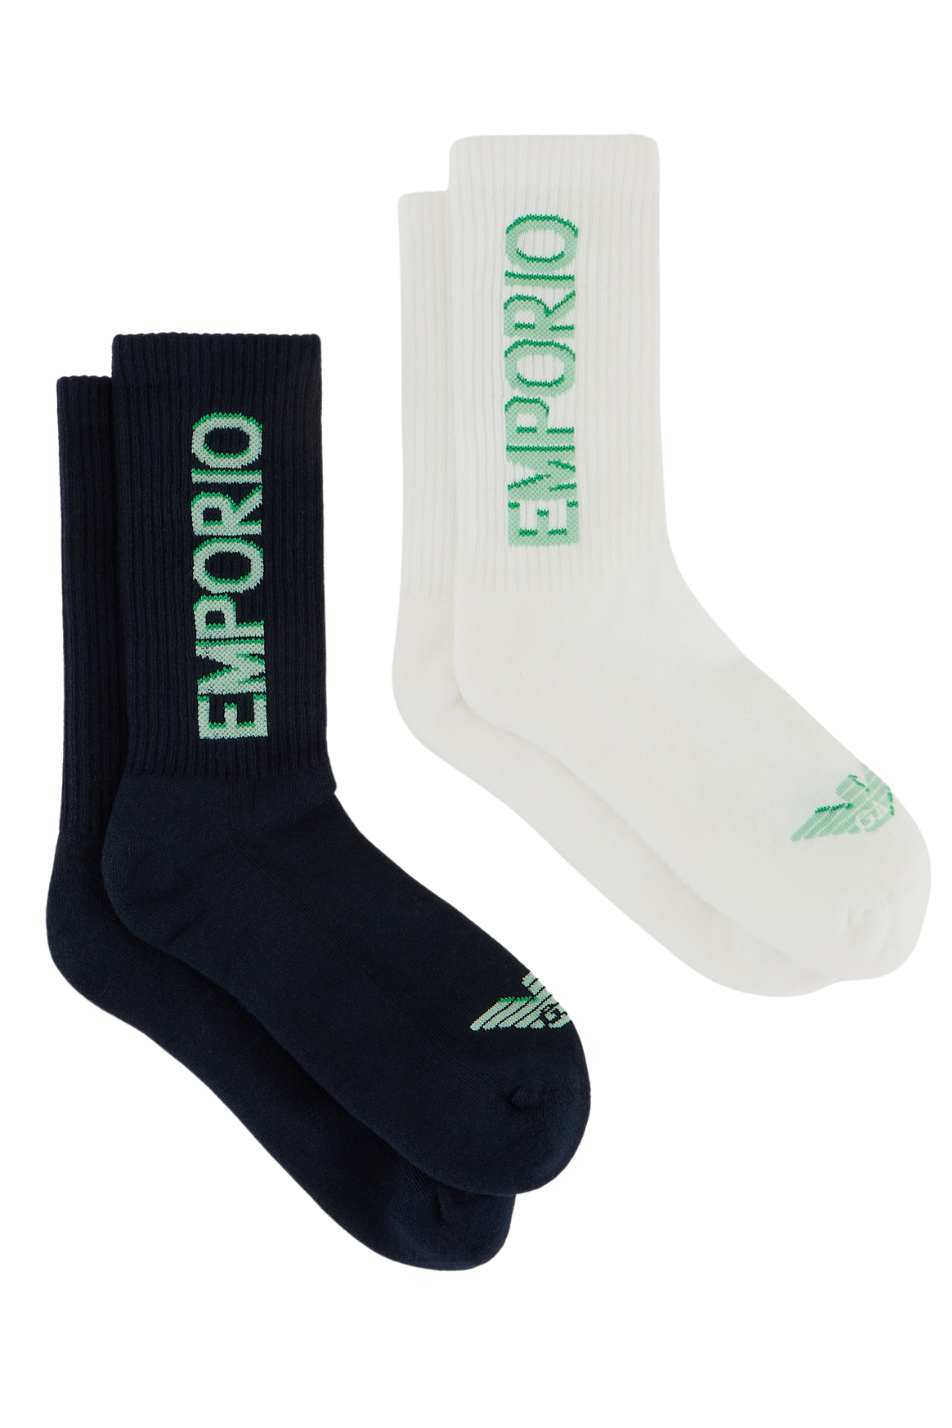 Emporio Armani 2 Pack Men's Short Sock